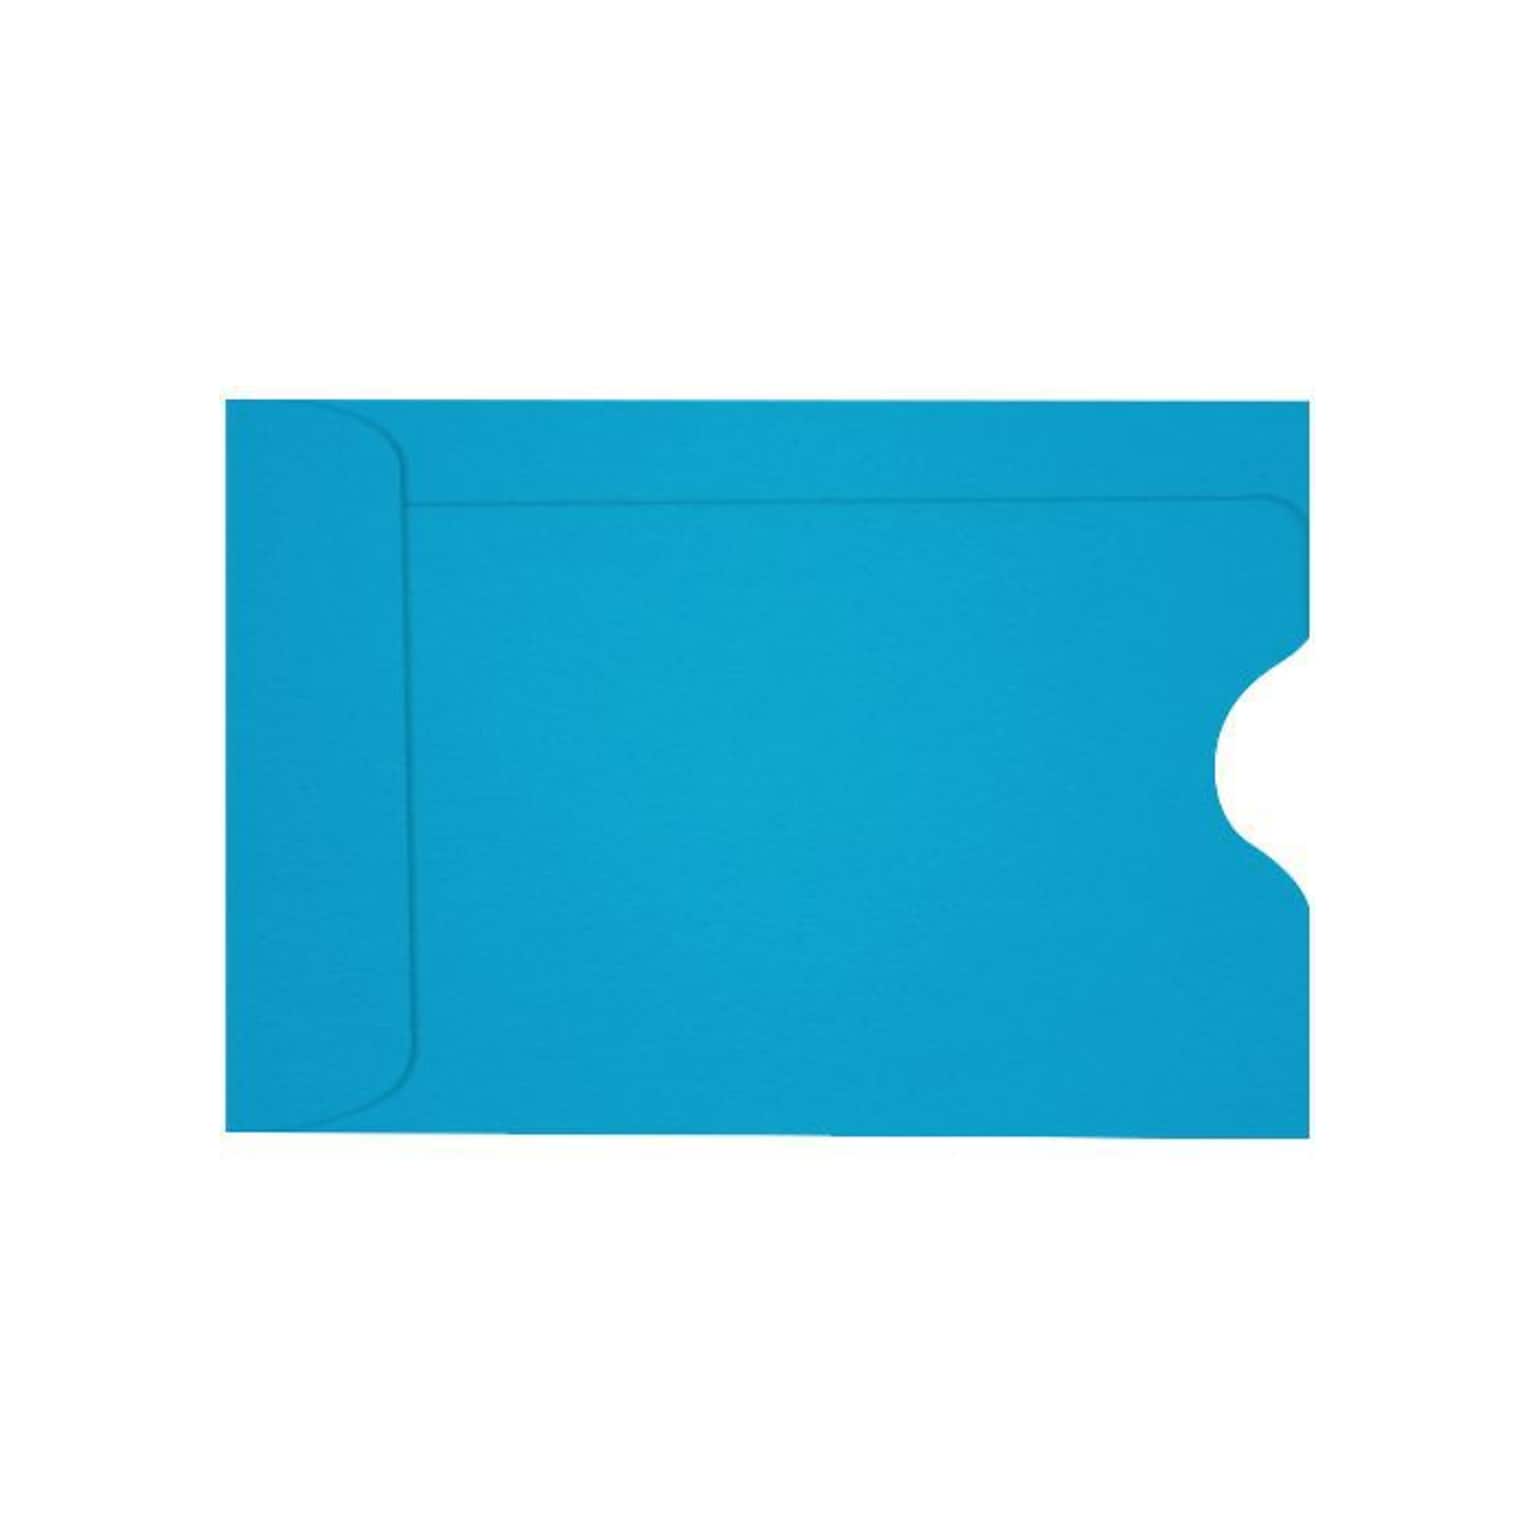 LUX Credit Card Sleeve 2 3/8 x 3 1/2, Pool Blue, 250/PK (1801-102-250)